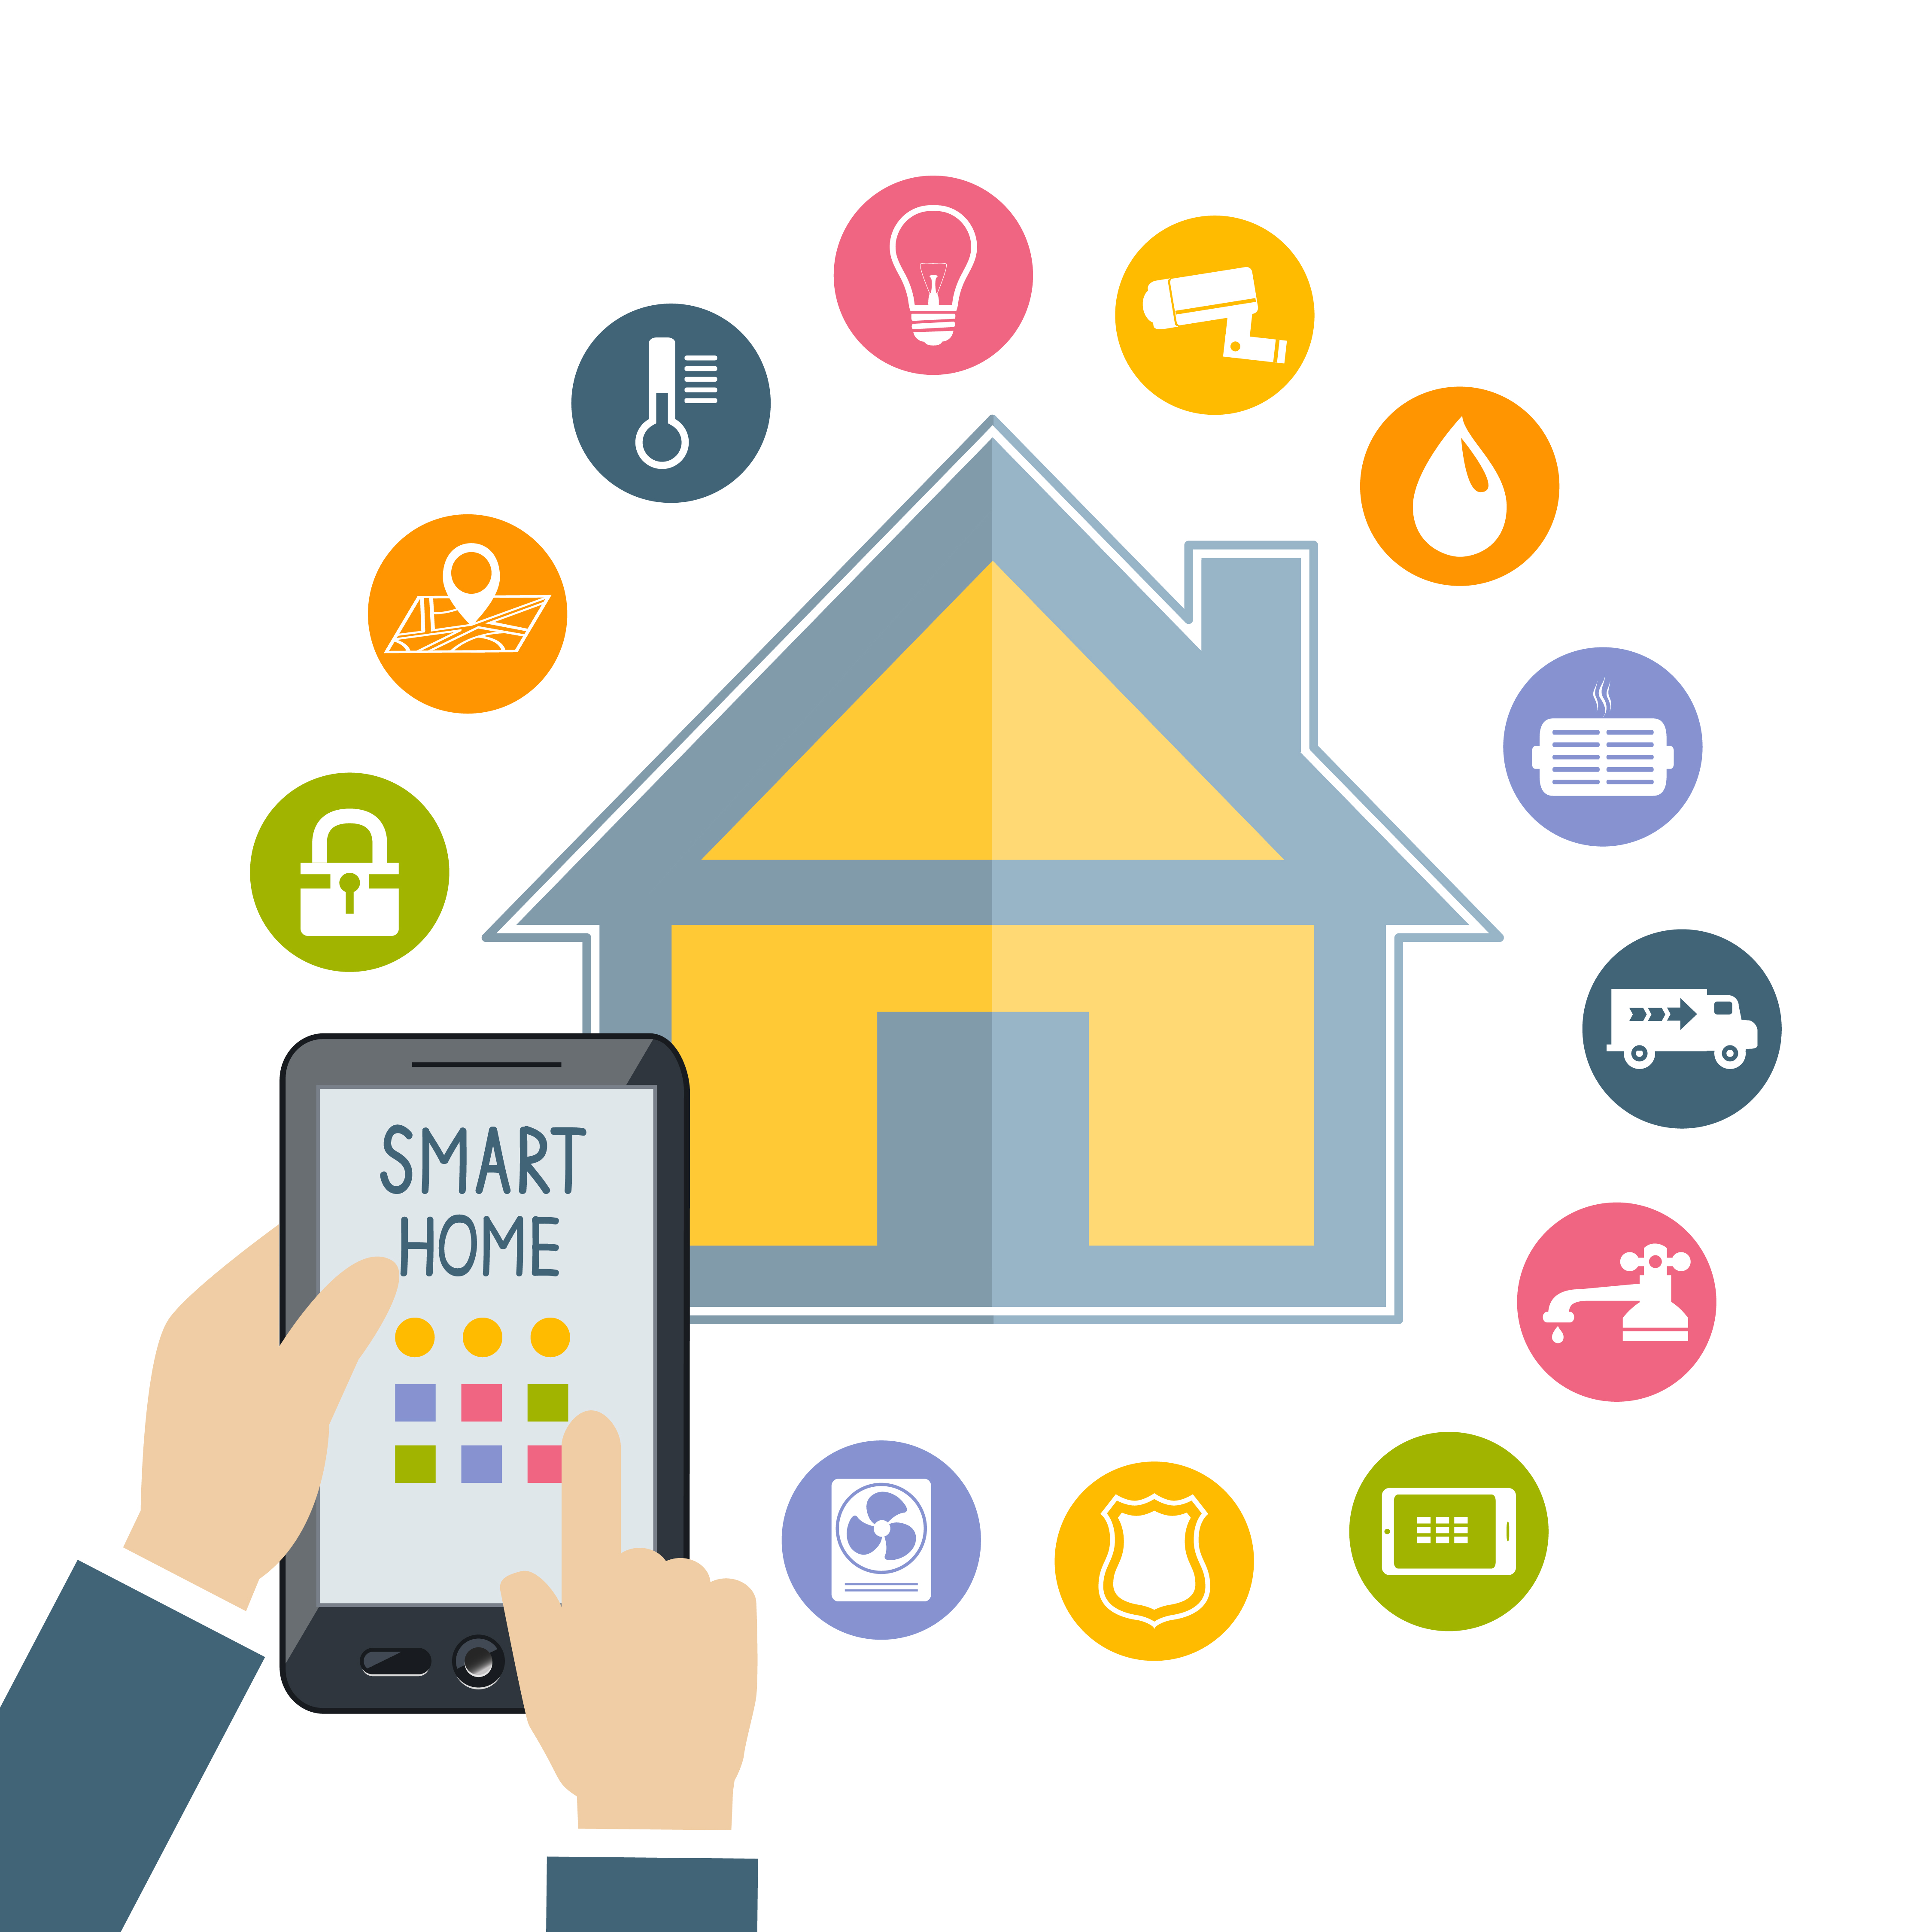 Smart-home icons | Noun Project